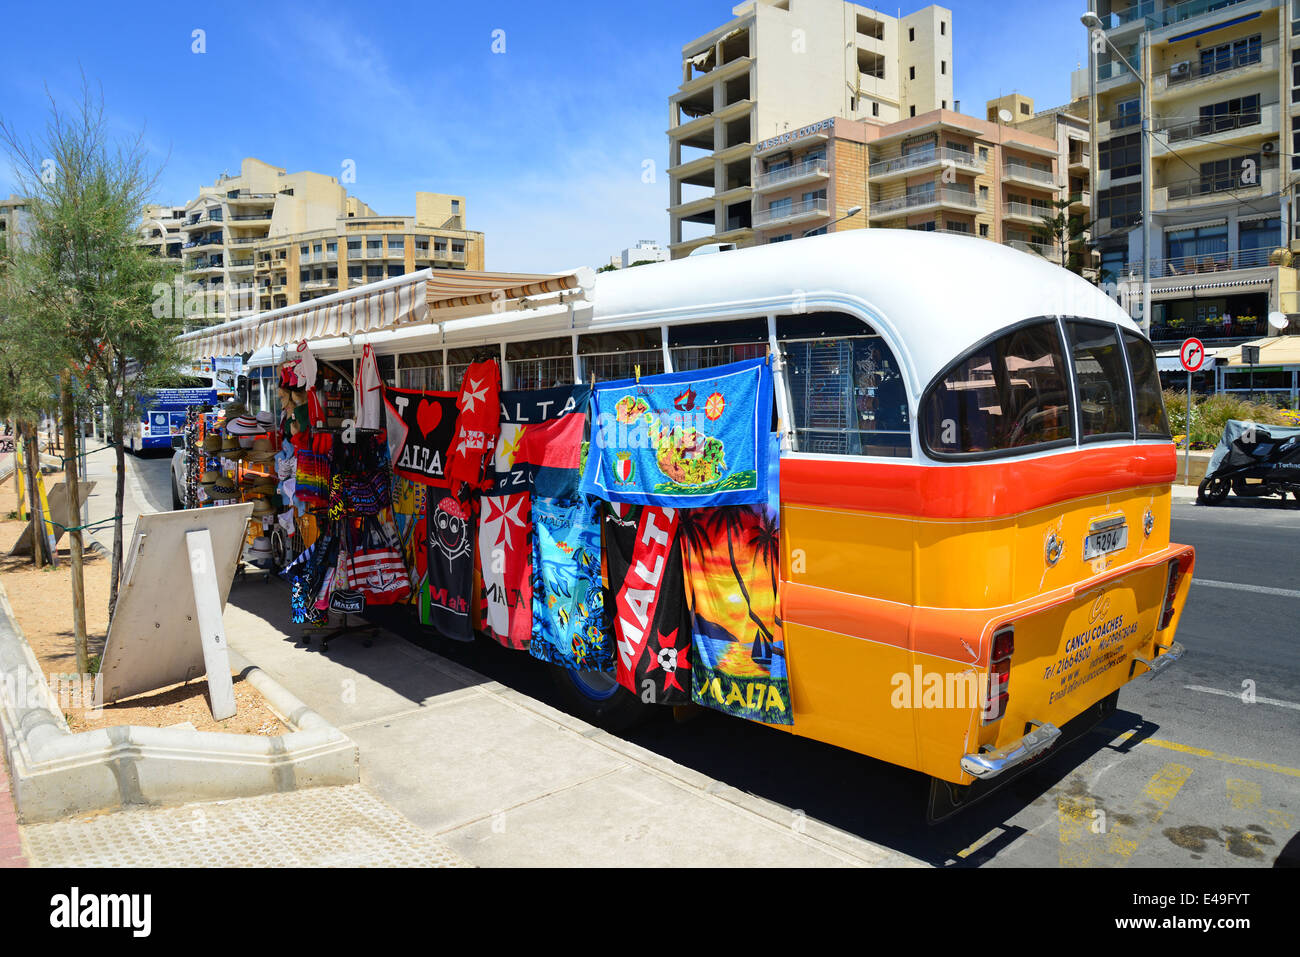 Tourist shop in vintage Maltese bus, Sliema (Tas-Sliema), Northern Harbour District, Malta Xlokk Region, Republic of Malta Stock Photo